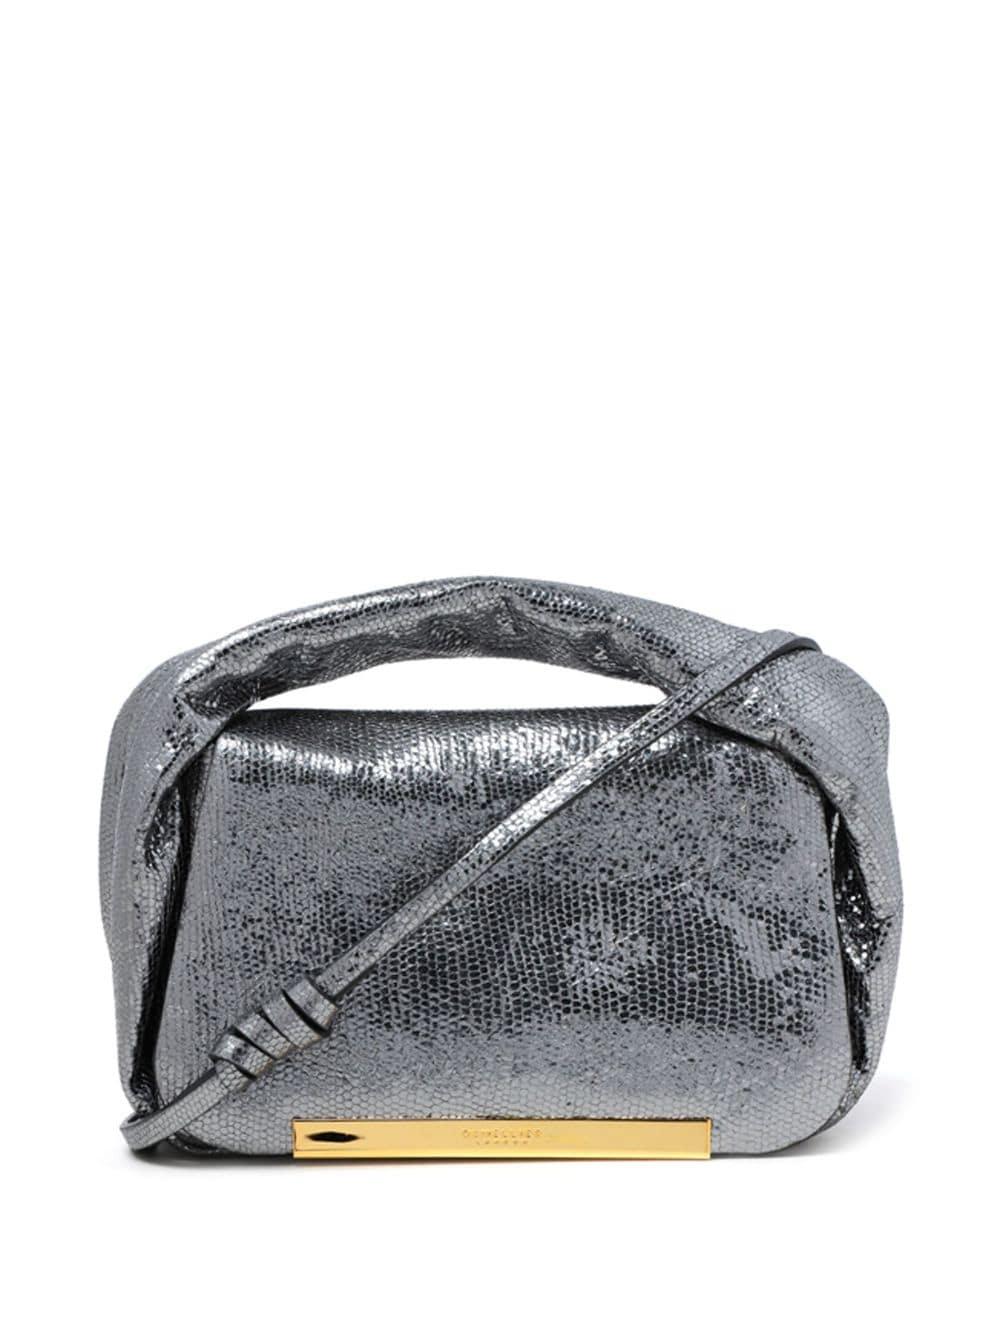 DeMellier Lisbon Metallic Leather Mini Bag in Gray | Lyst